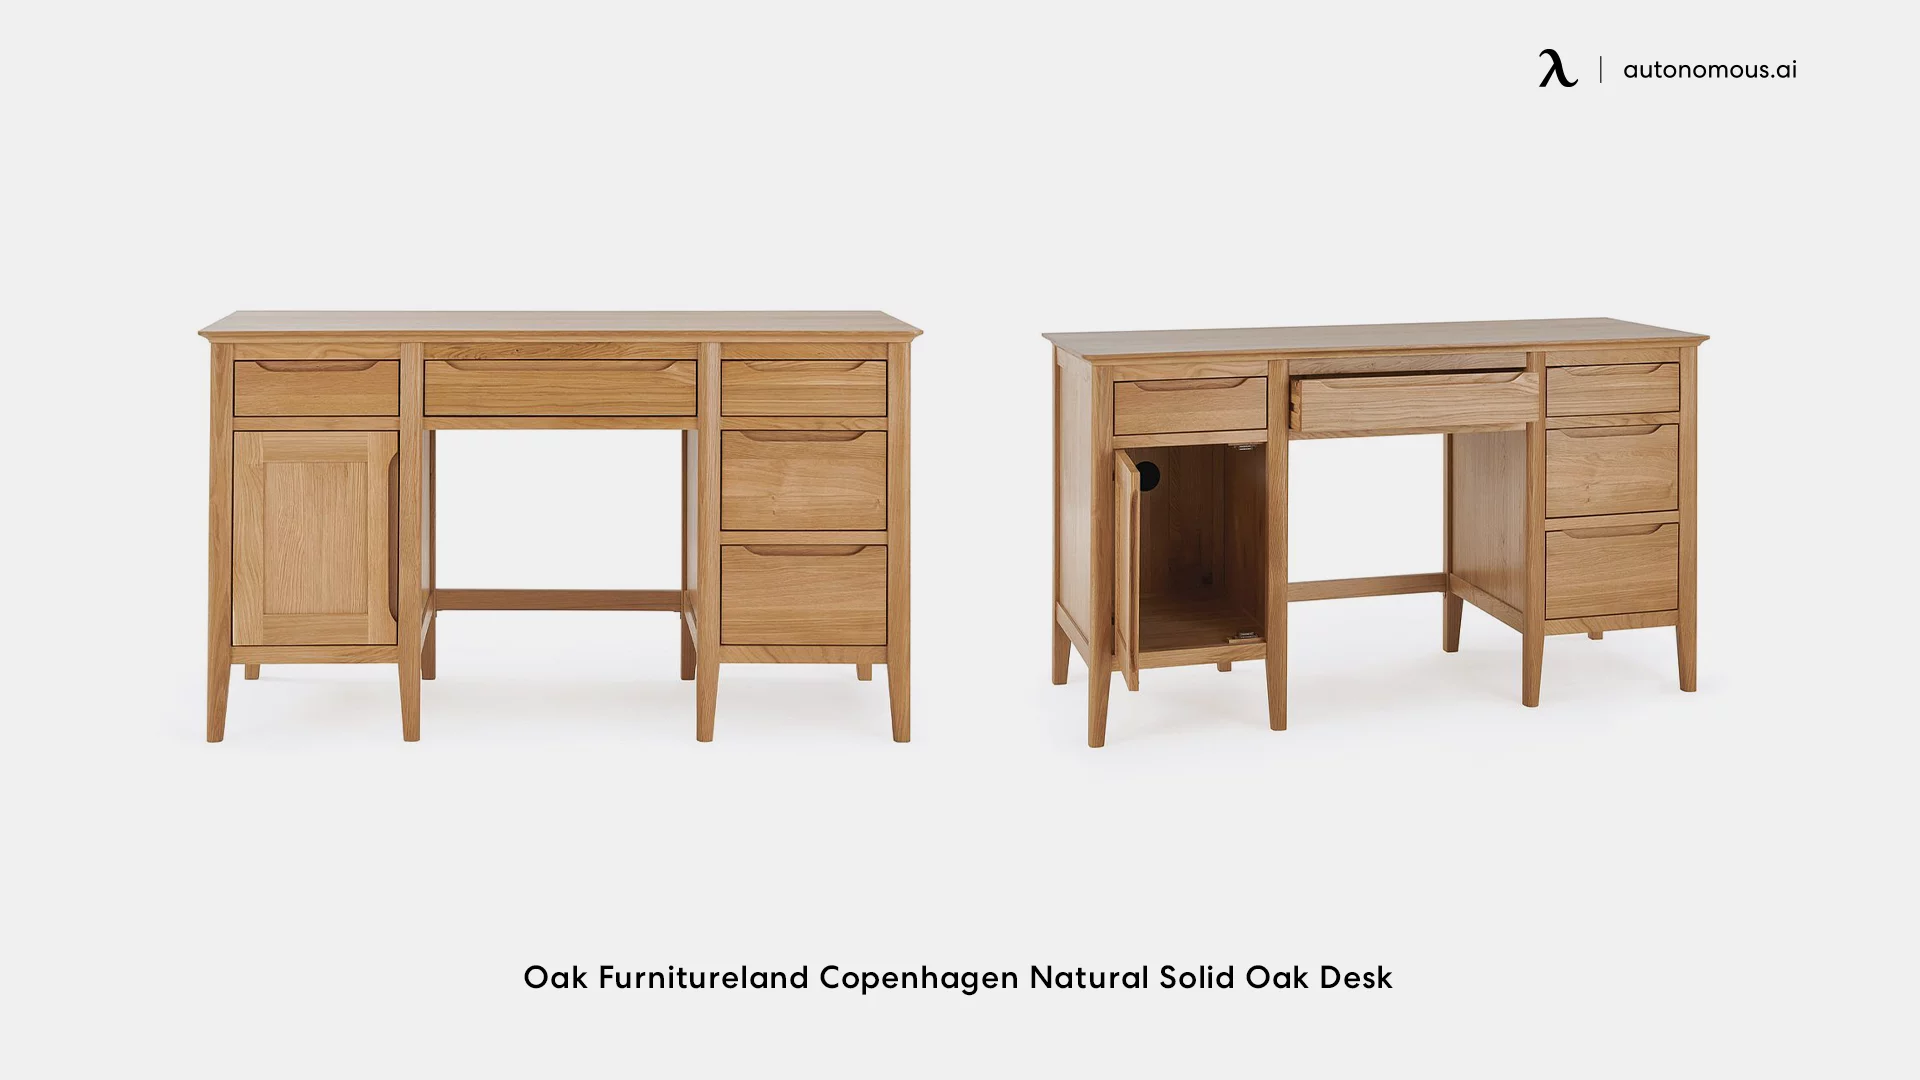 Oakland Furnitureland Copenhagen Natural Solid Oak Desk